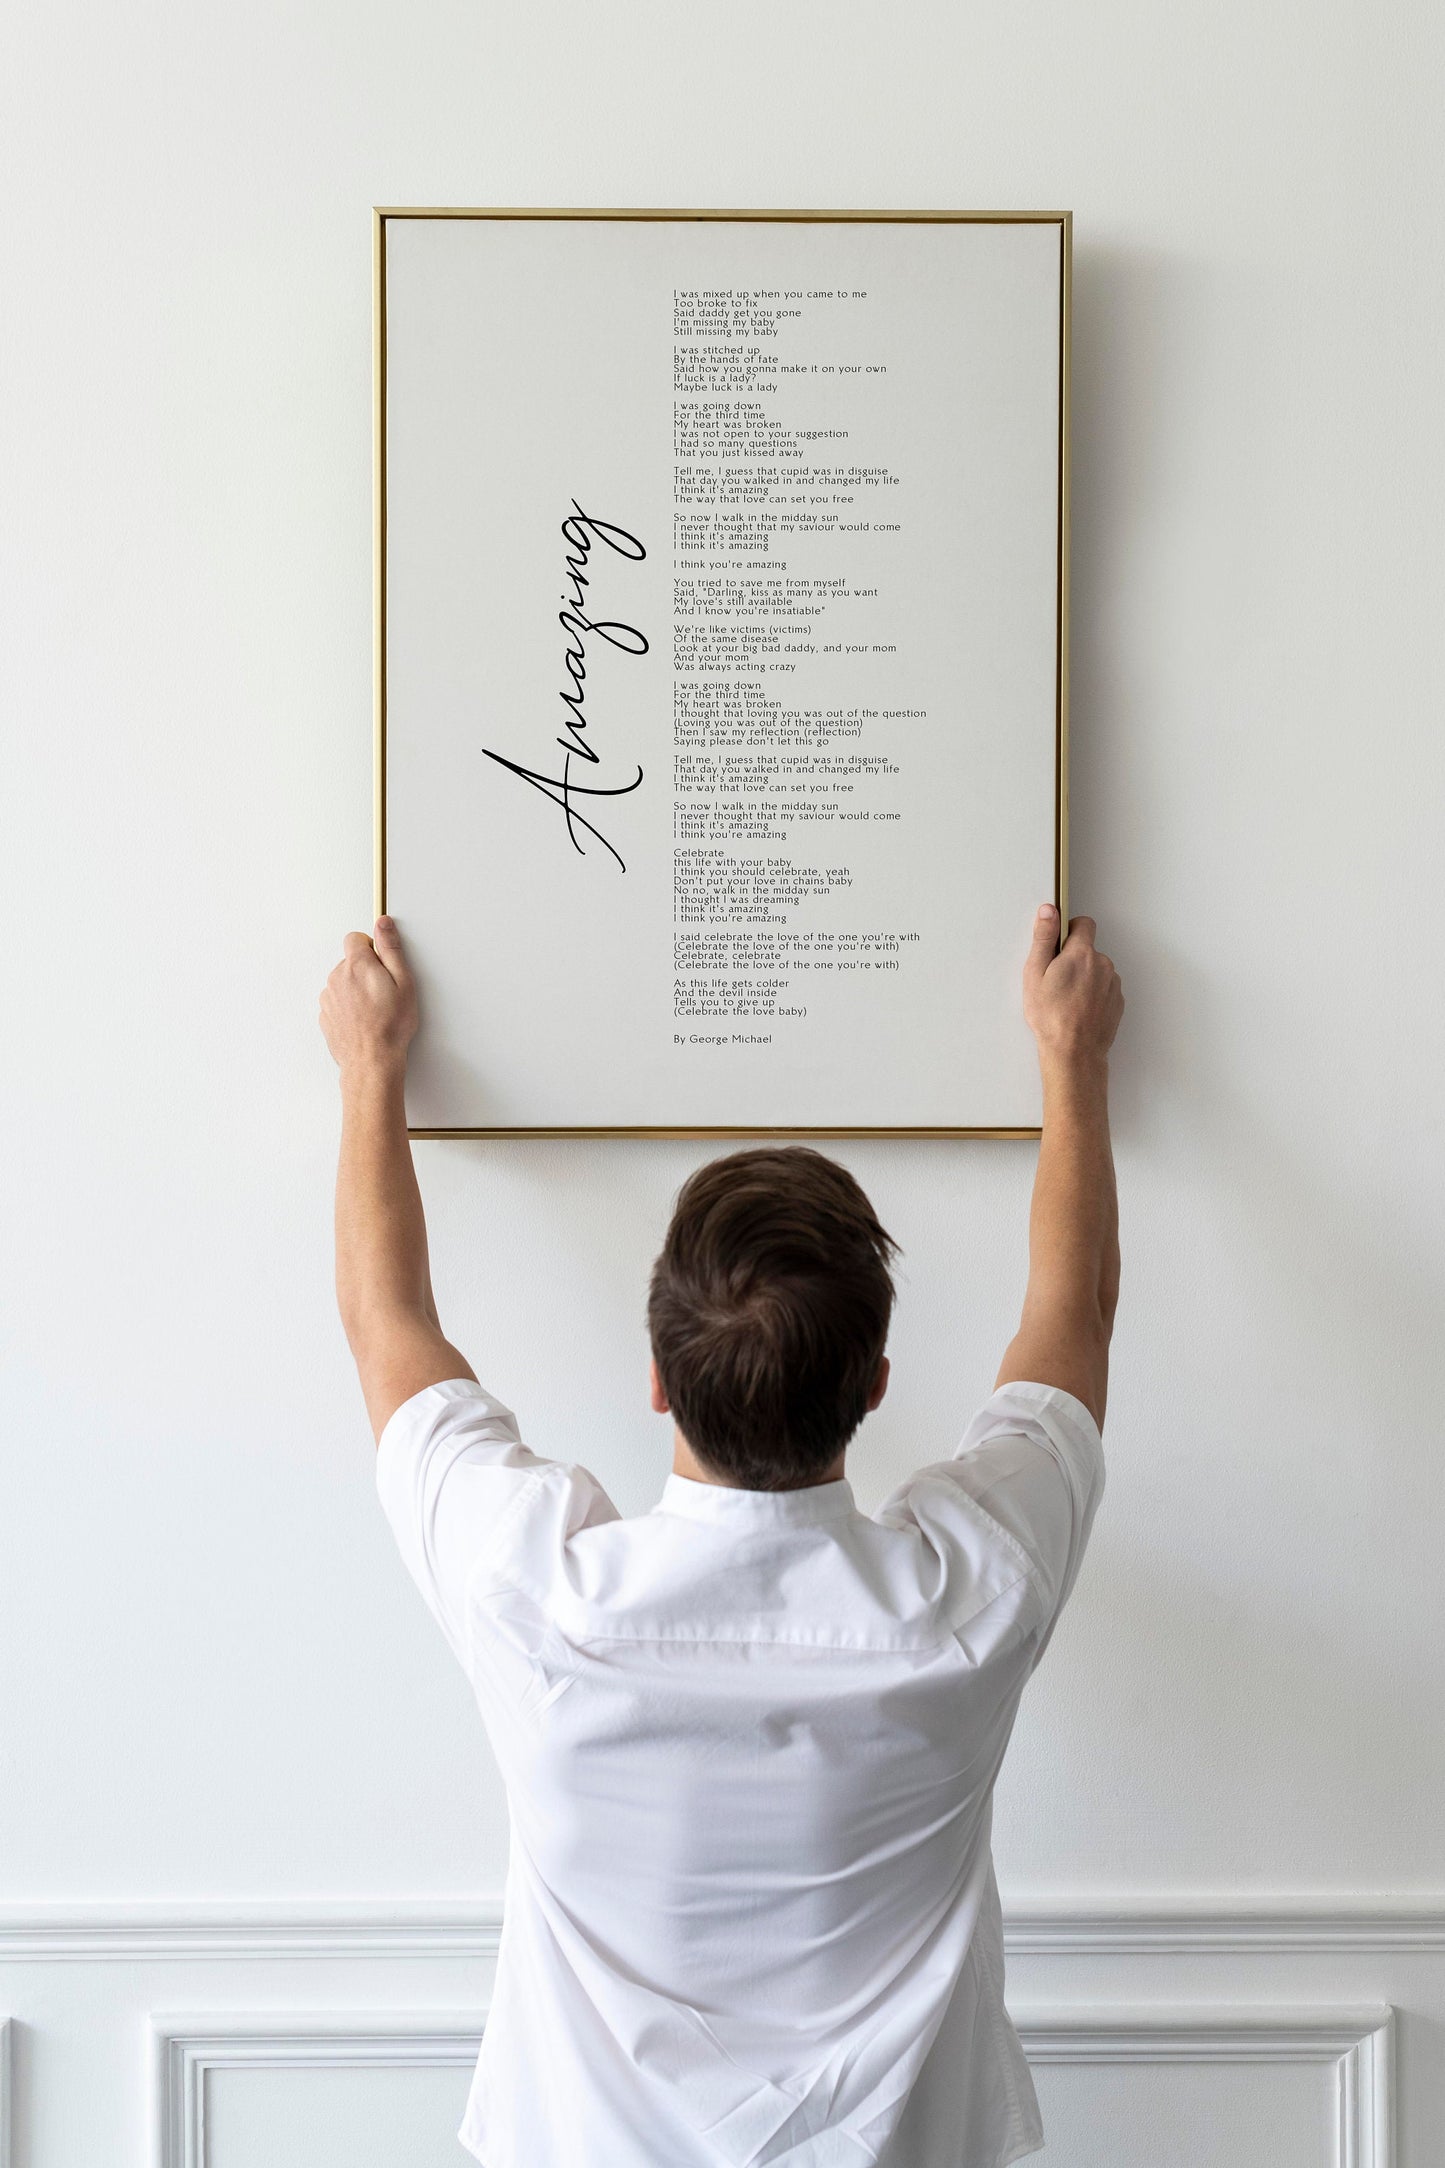 Amazing by George Michael Poster - Framed Print Amazing Gift - Amazing song lyrics print